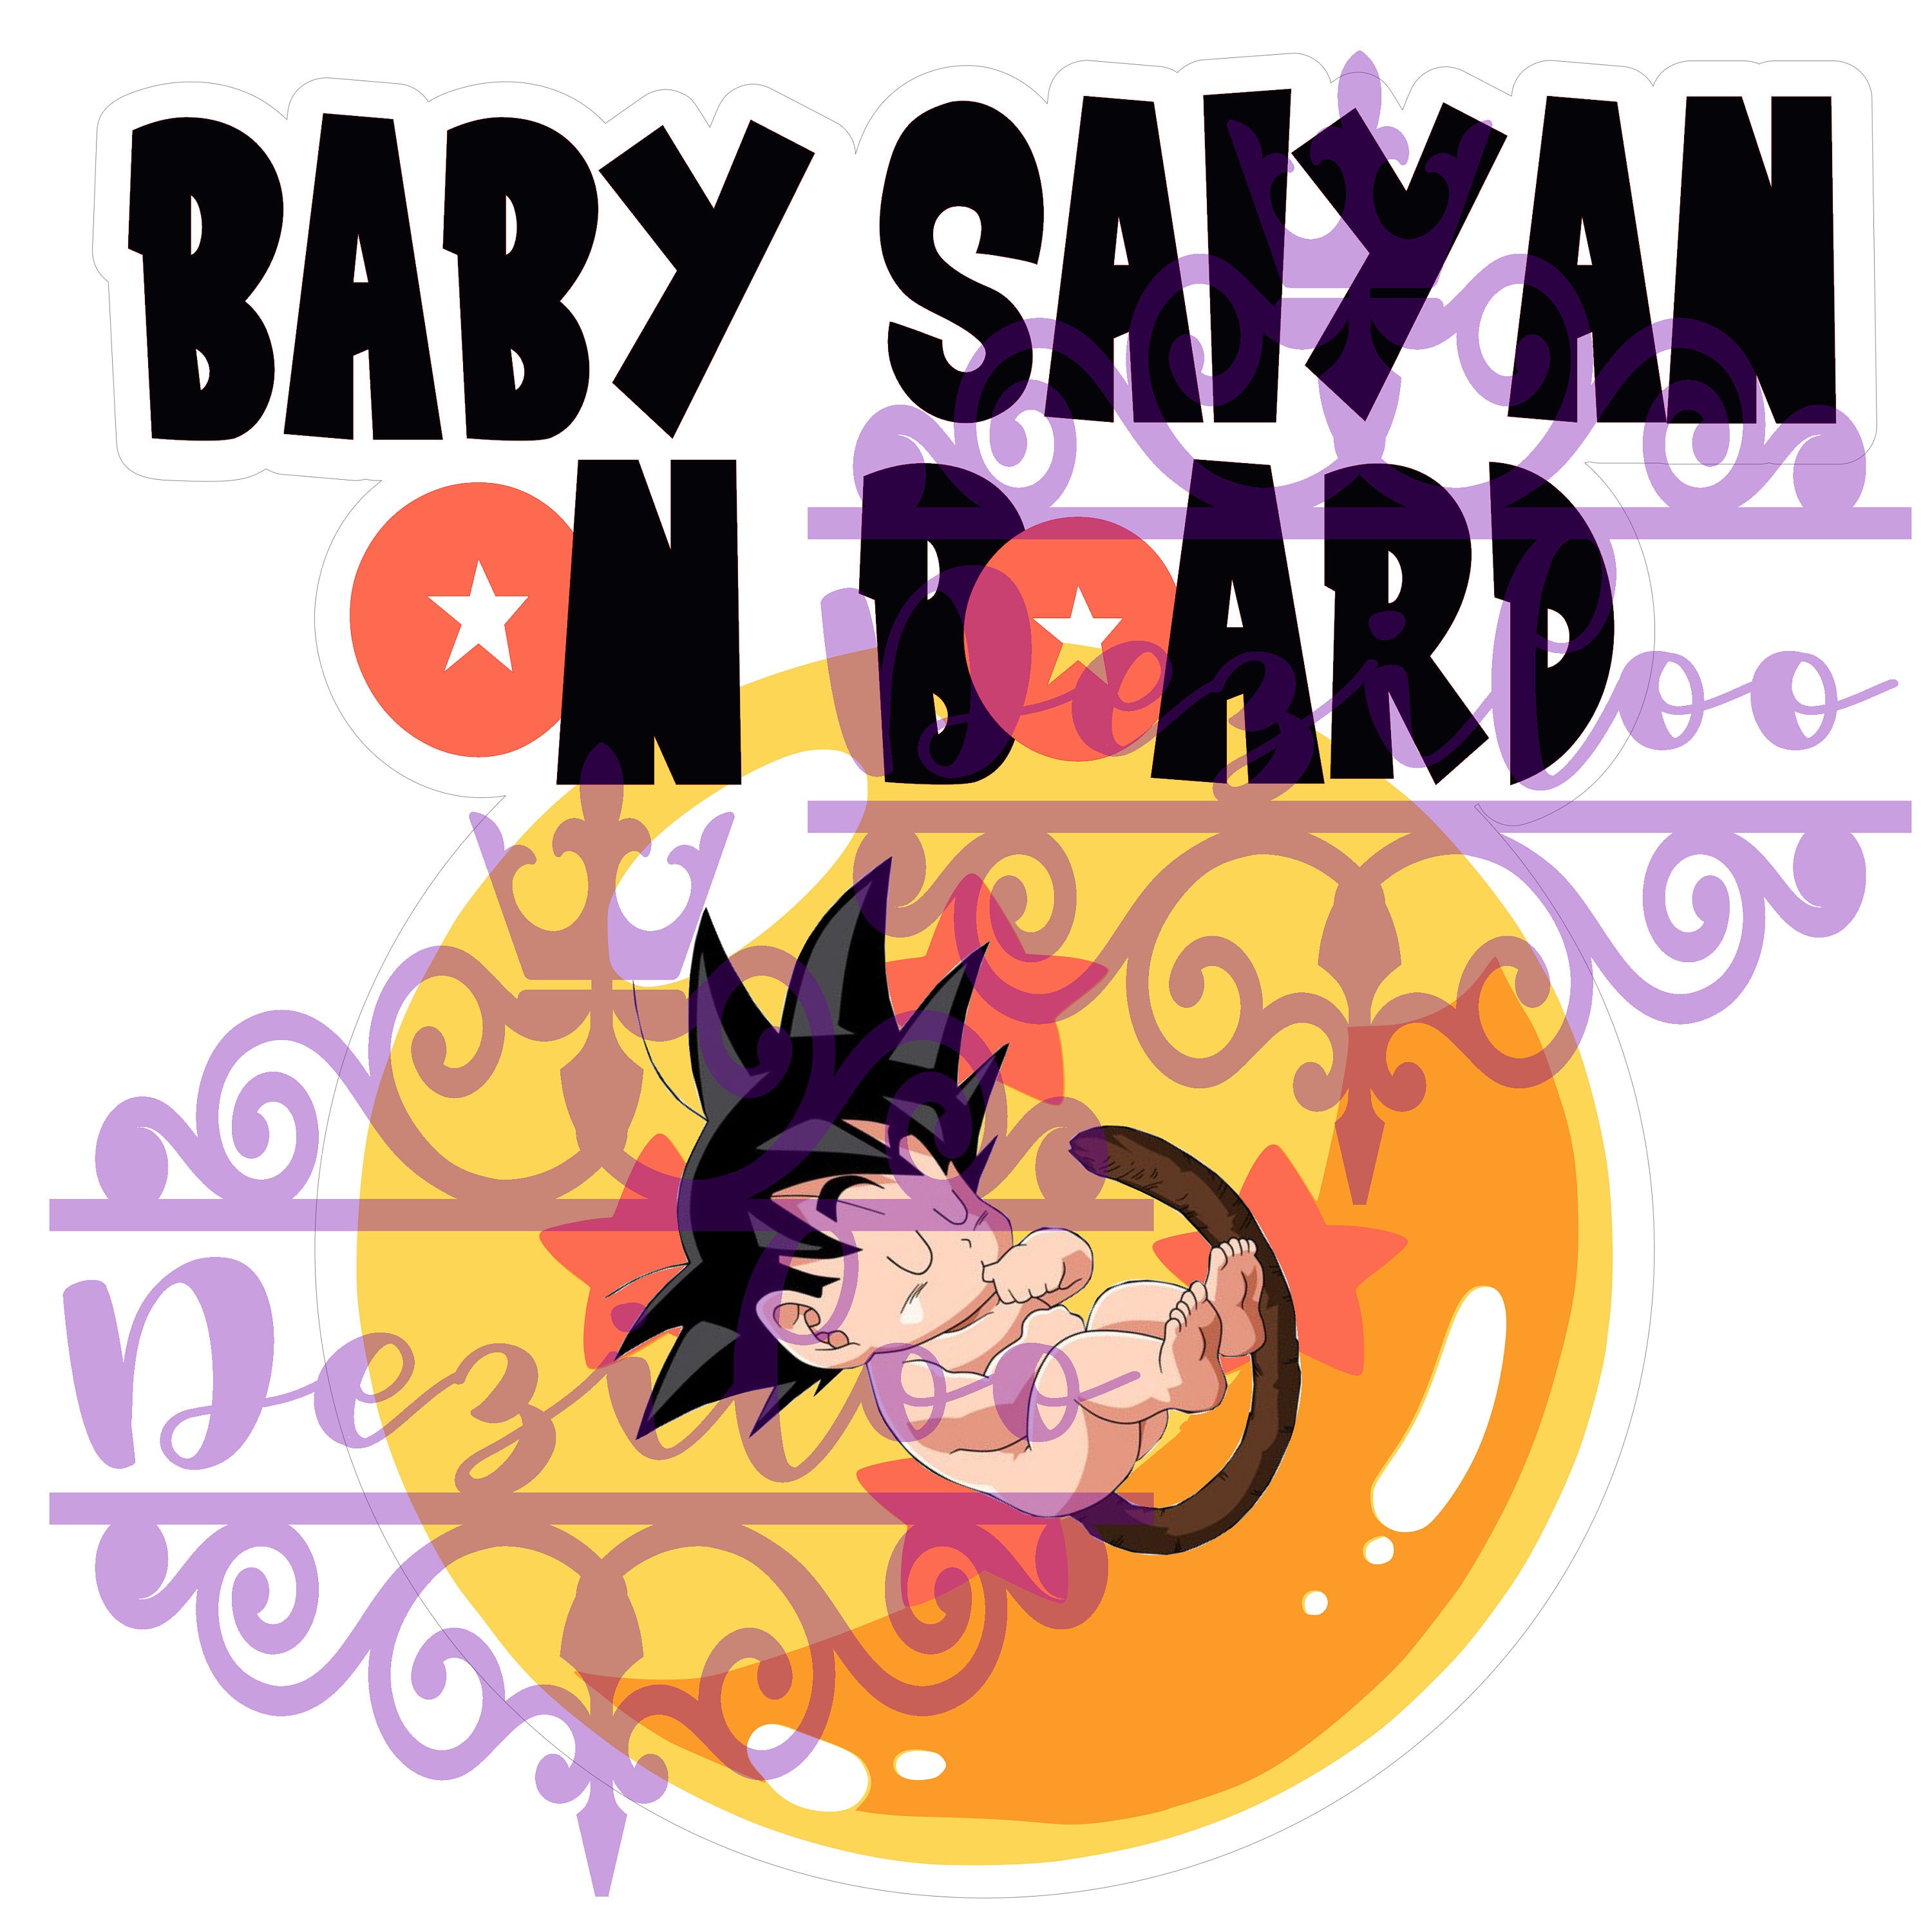 Baby on Board Mimics Super Warrior Board Car Sticker Dragon Ball